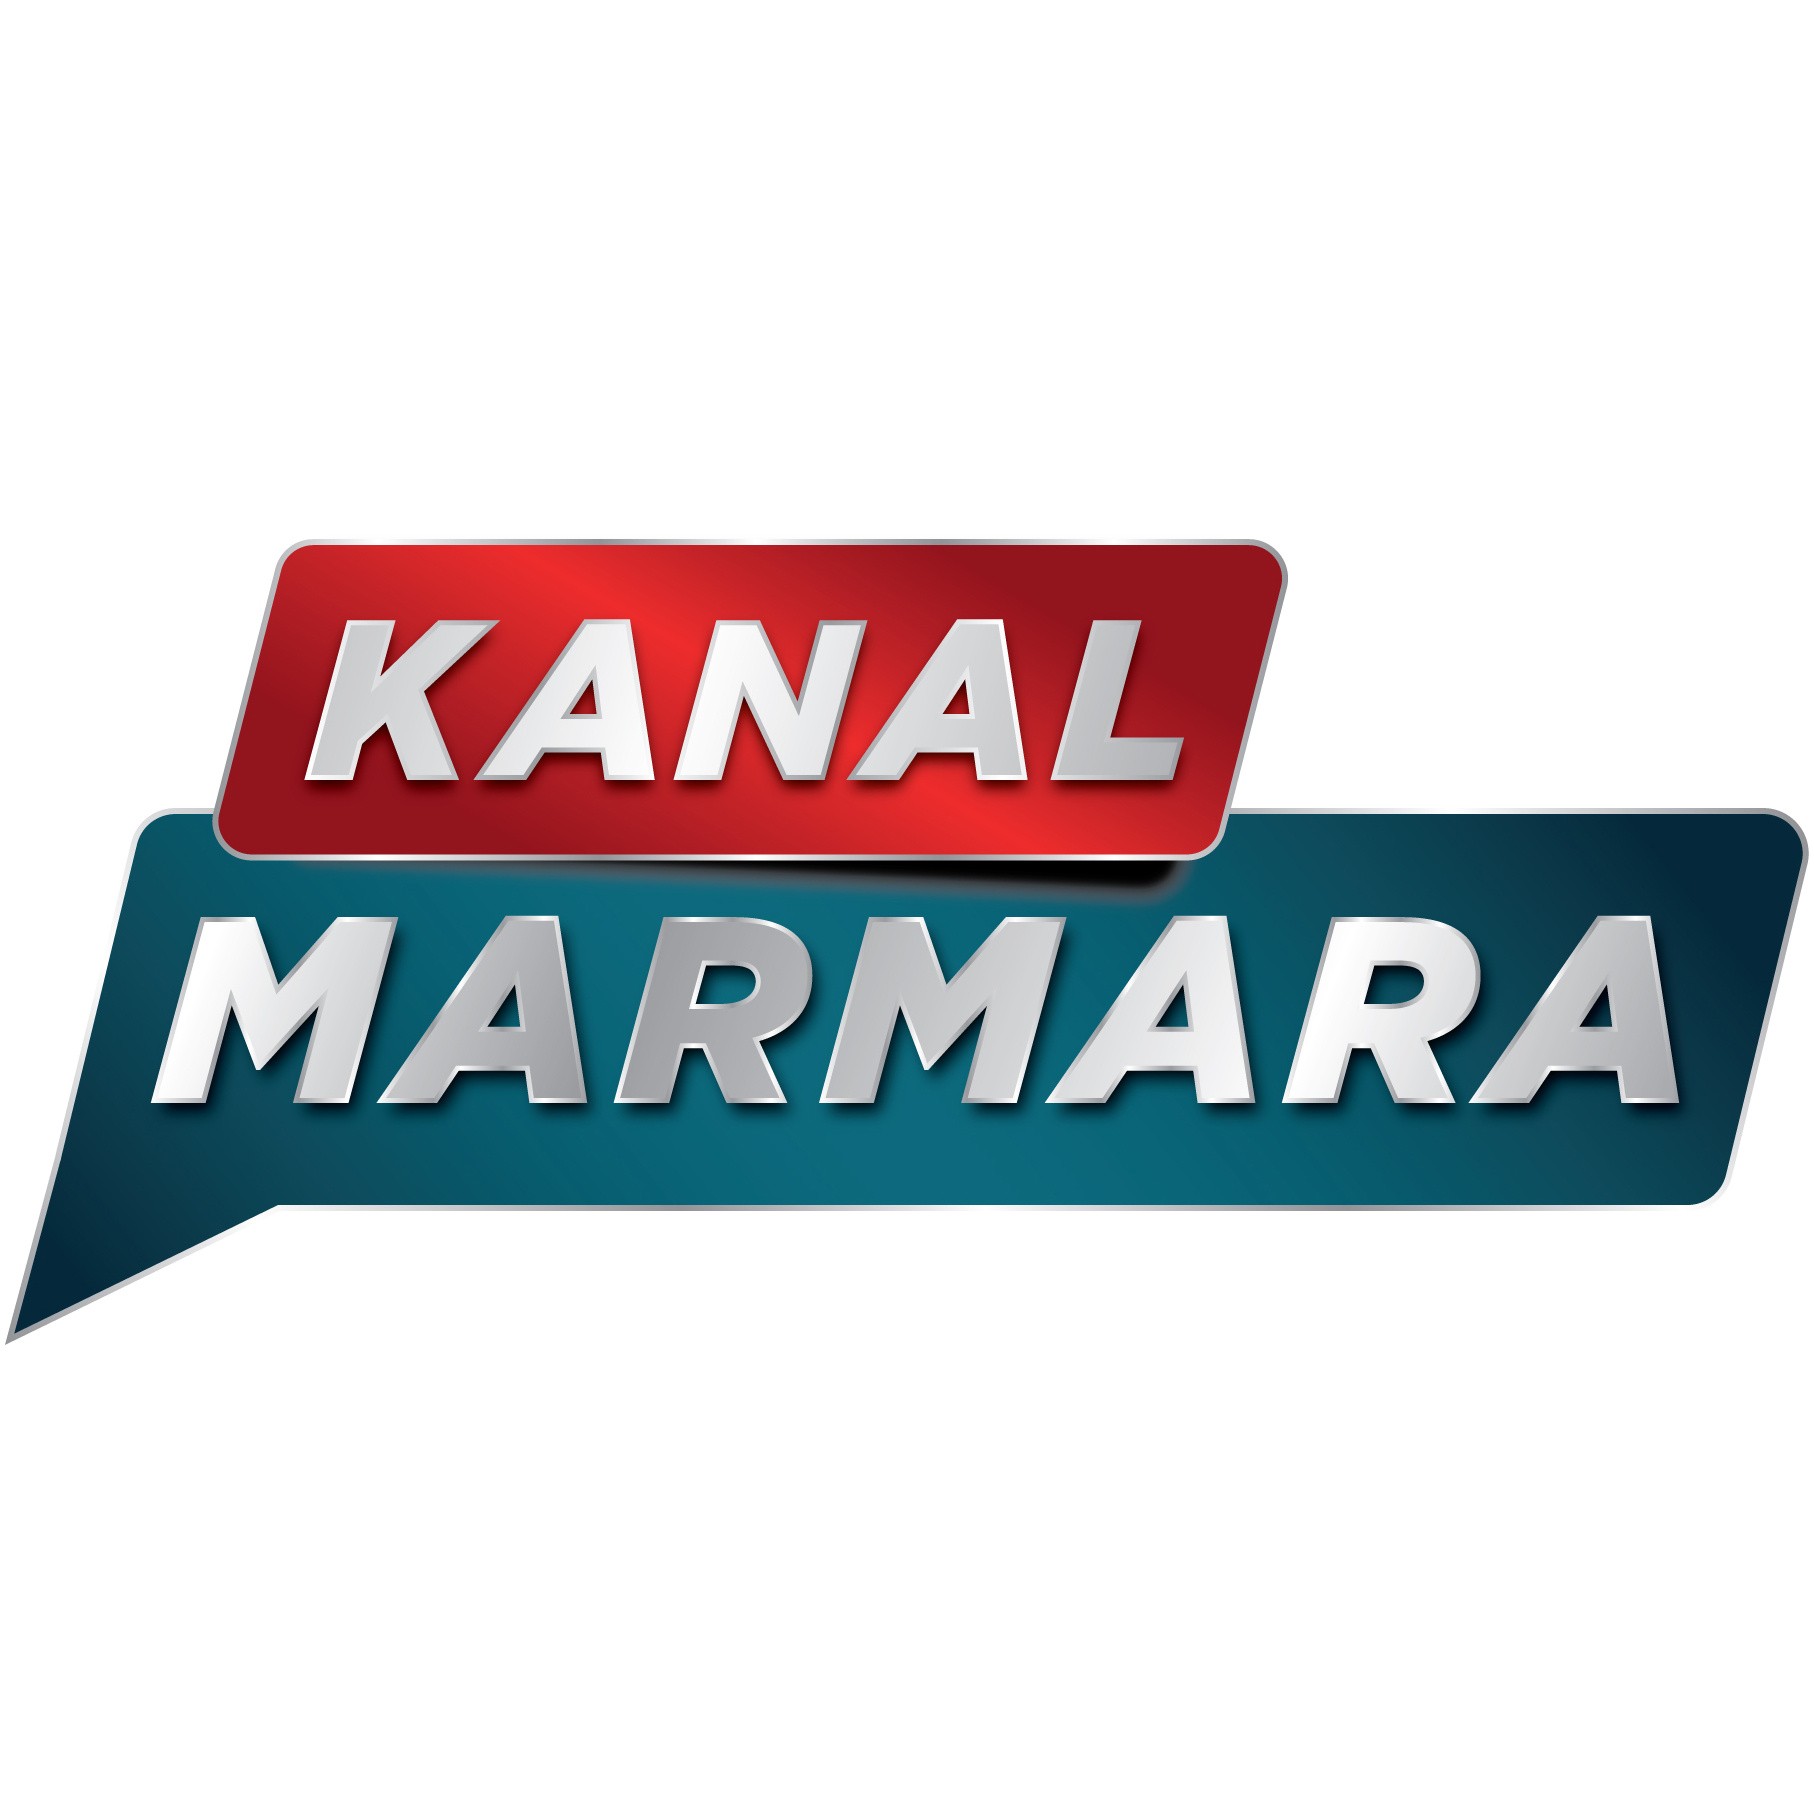 Kanal Marmara